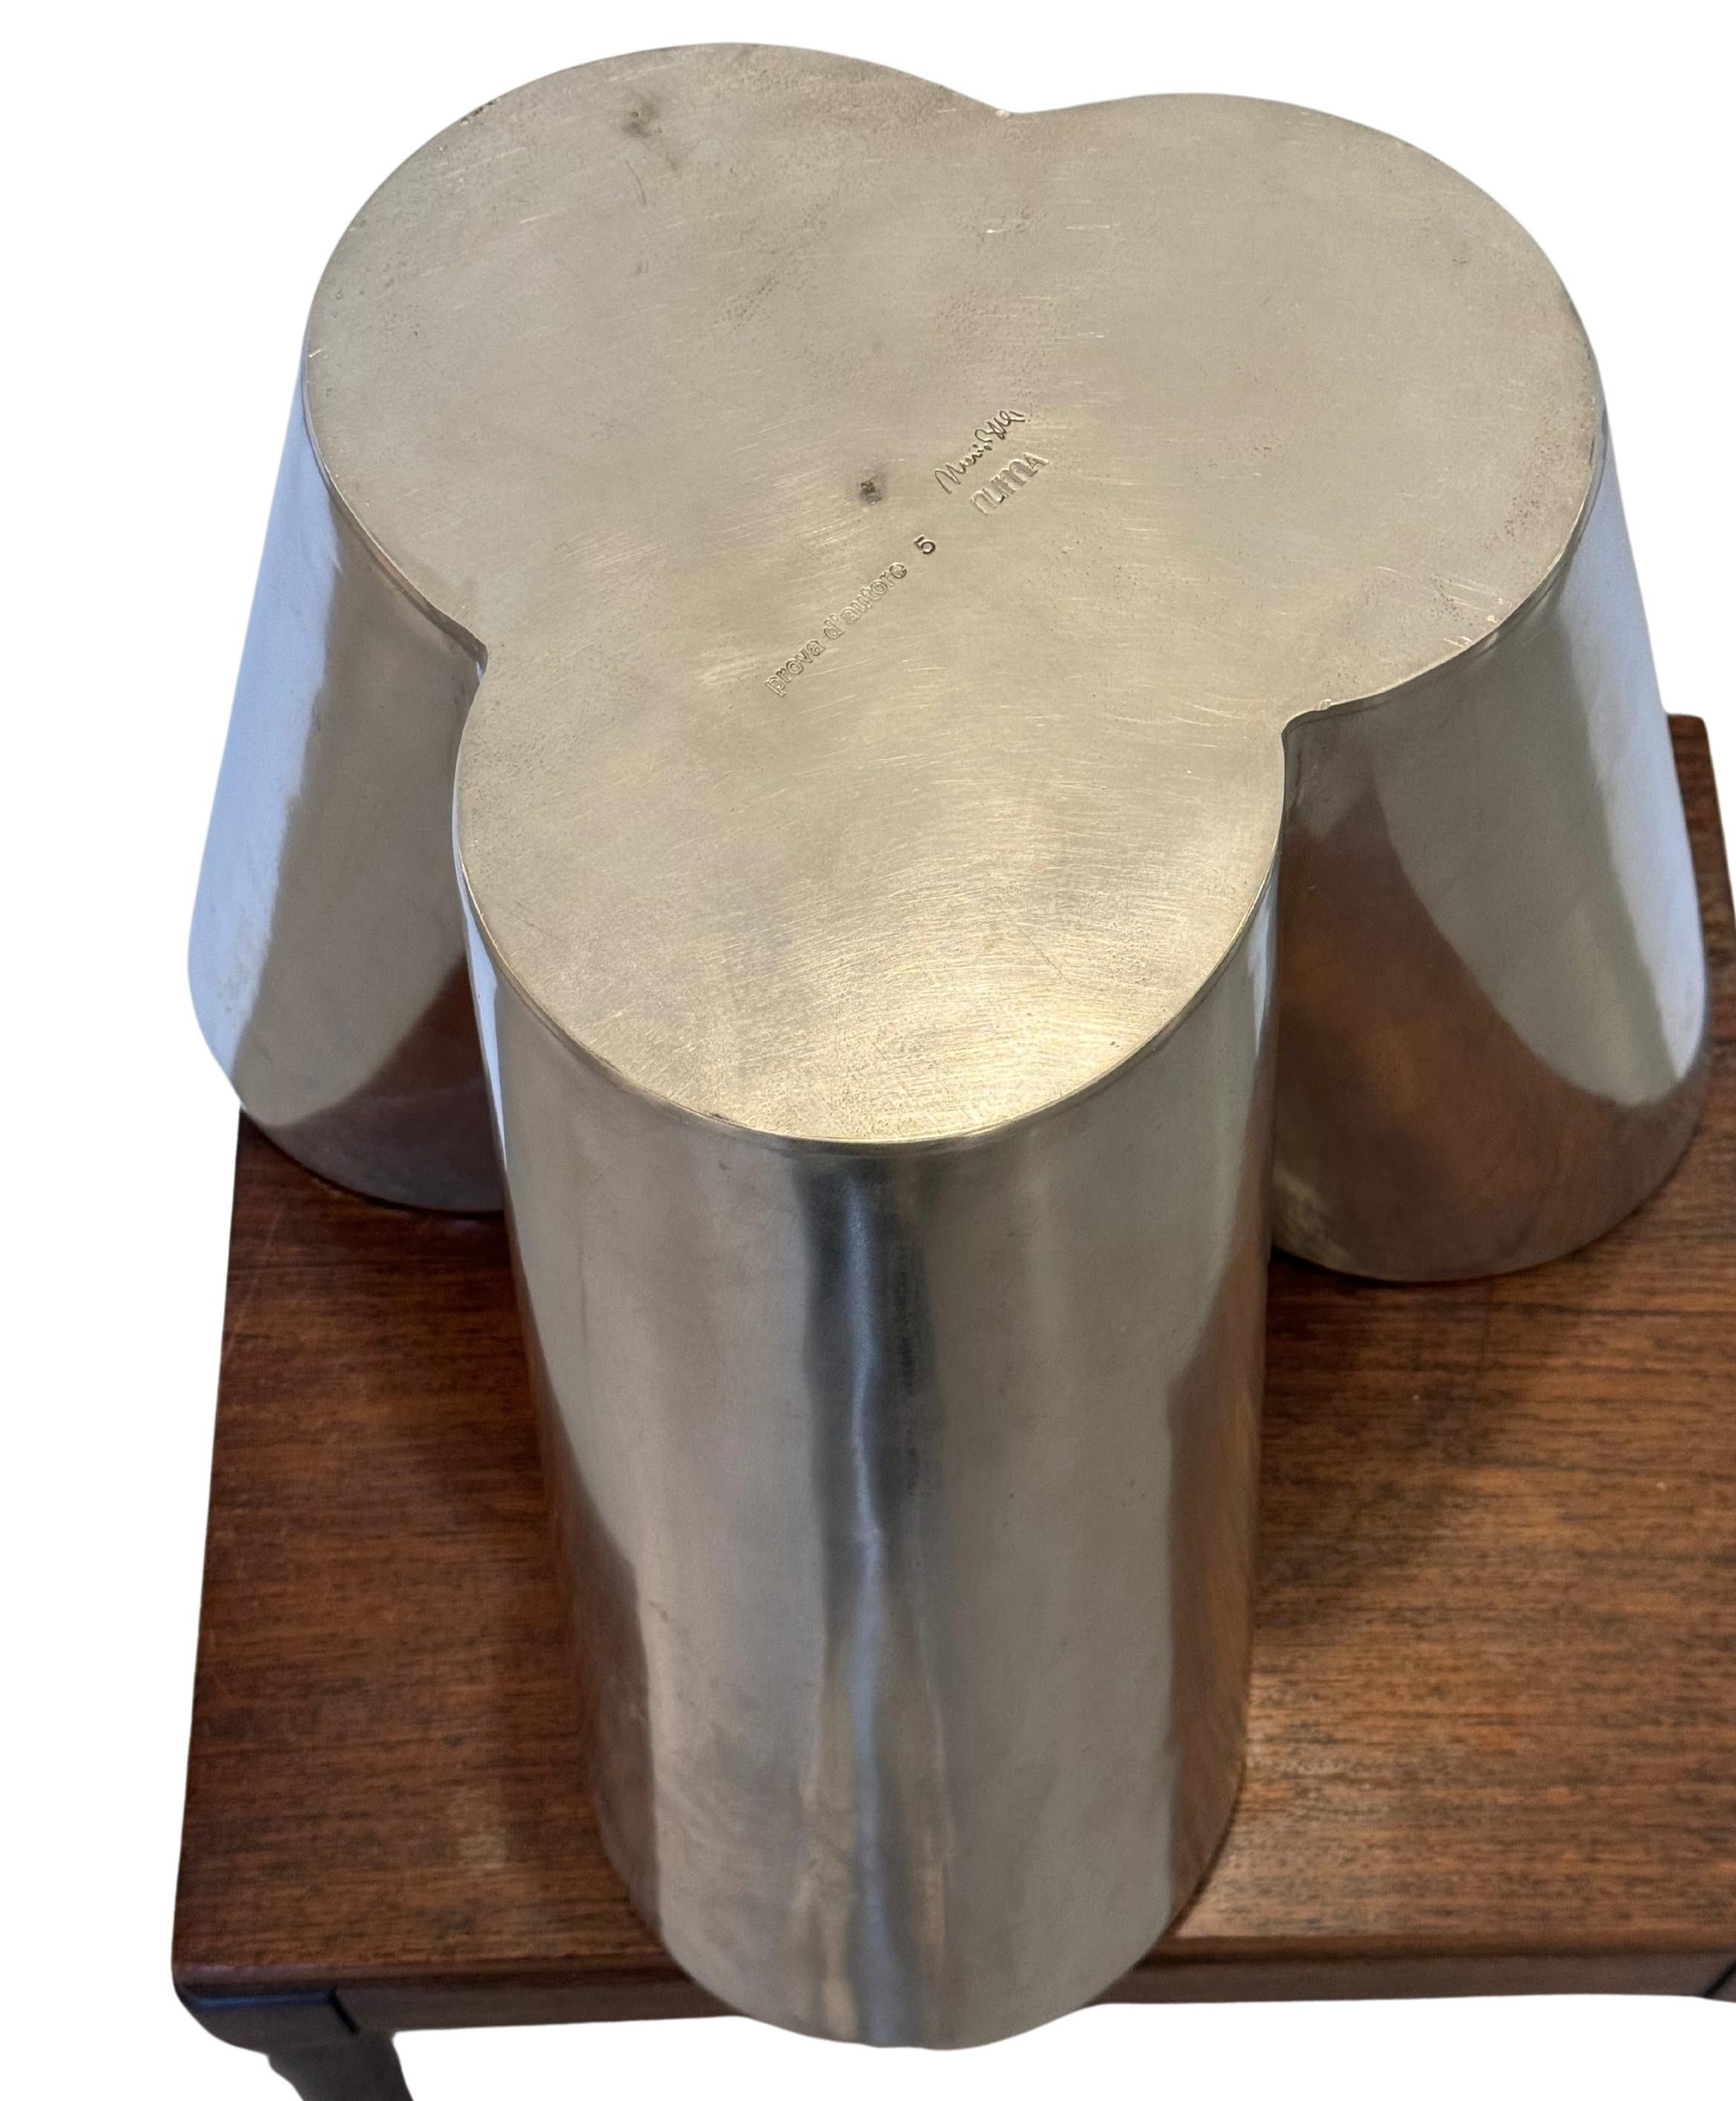 Contemporary Modernist Mario Botta 'Tredicivasi' Signed Pewter Vase Artist Proof Prototype For Sale